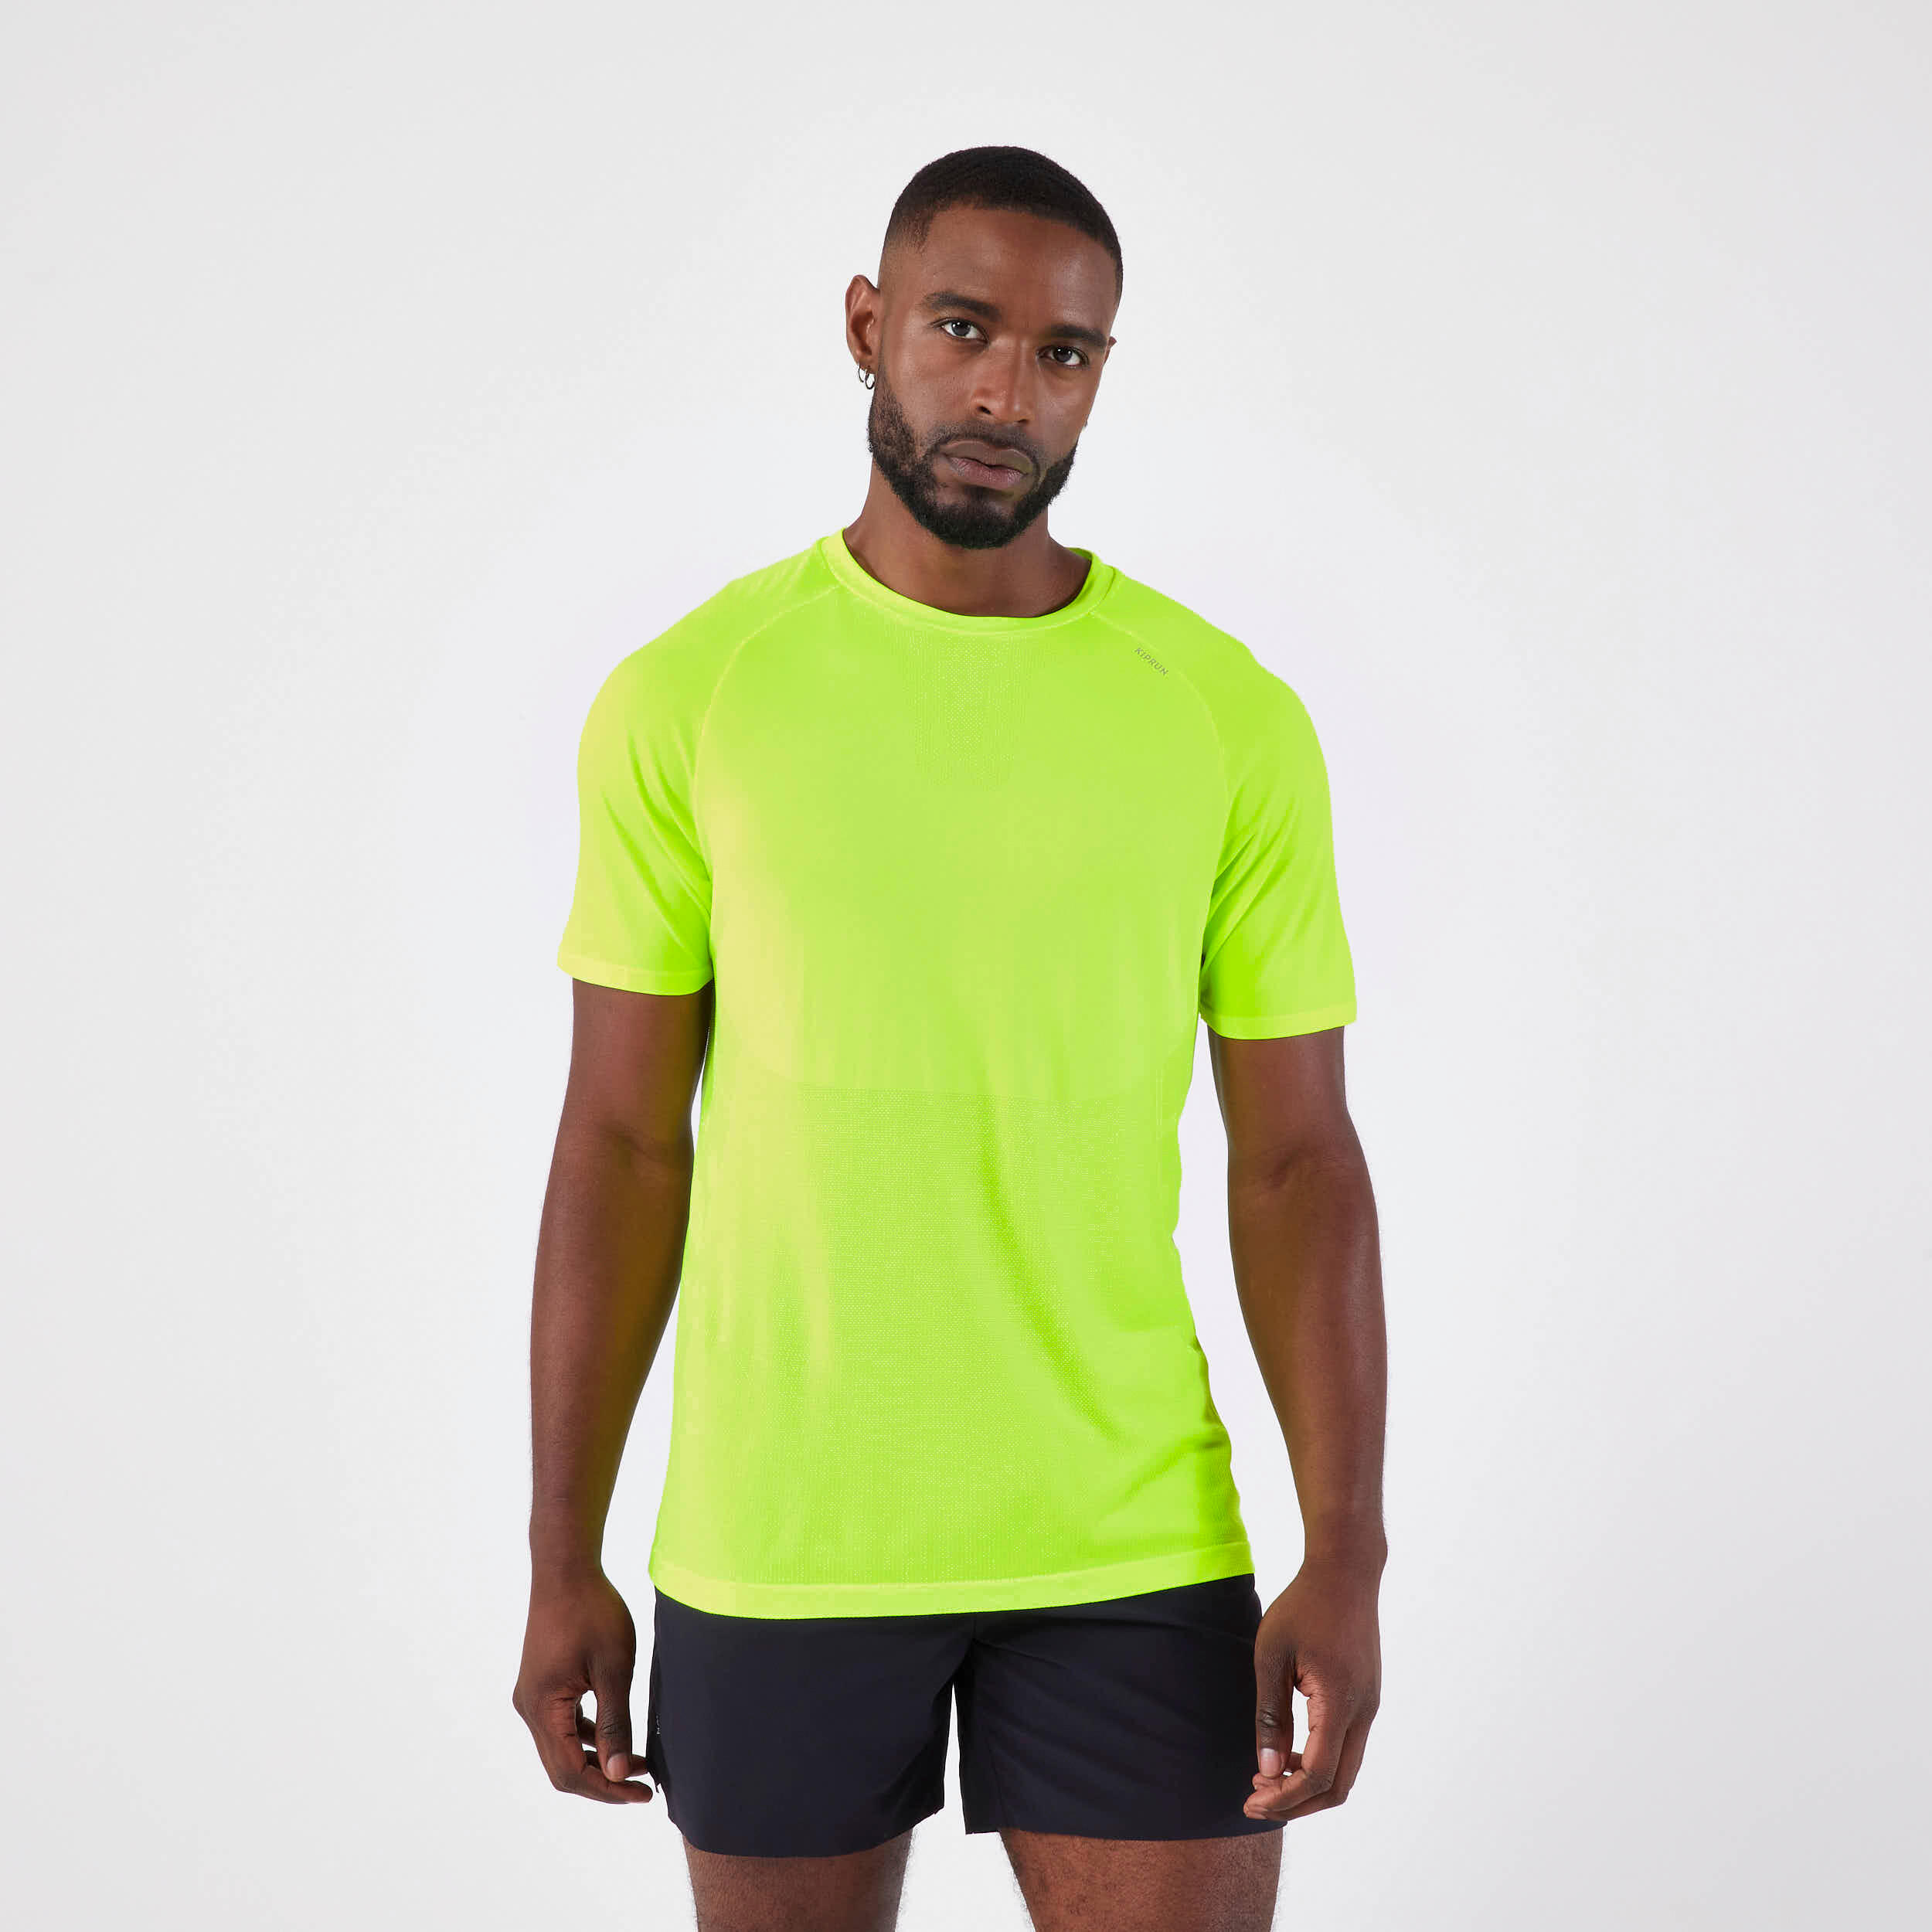 Men’s Running T-Shirt - Run 500 - Fluo lime yellow, fluo pale yellow ...